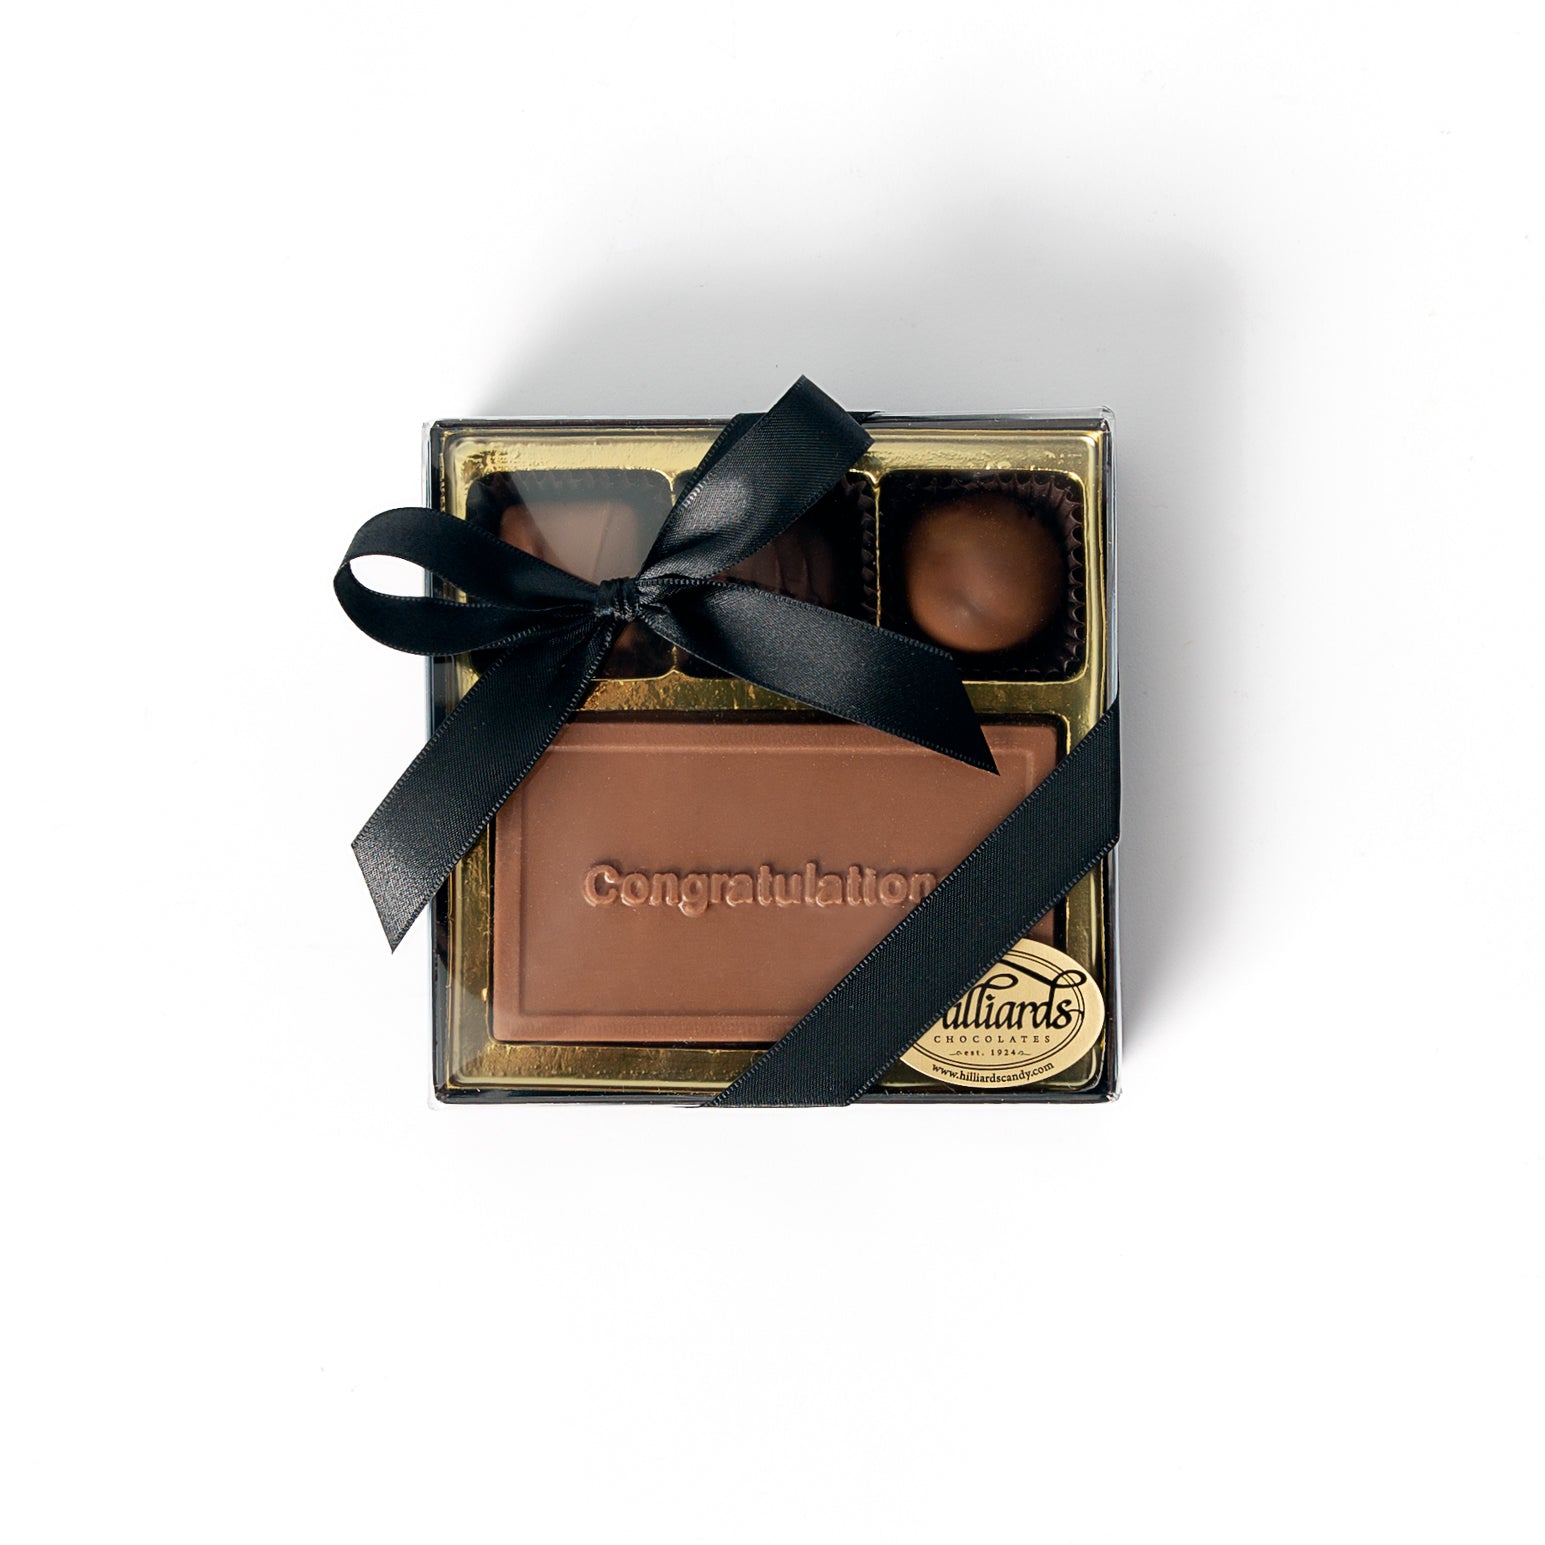 Congratulations Business Card Box – Hilliards Chocolates